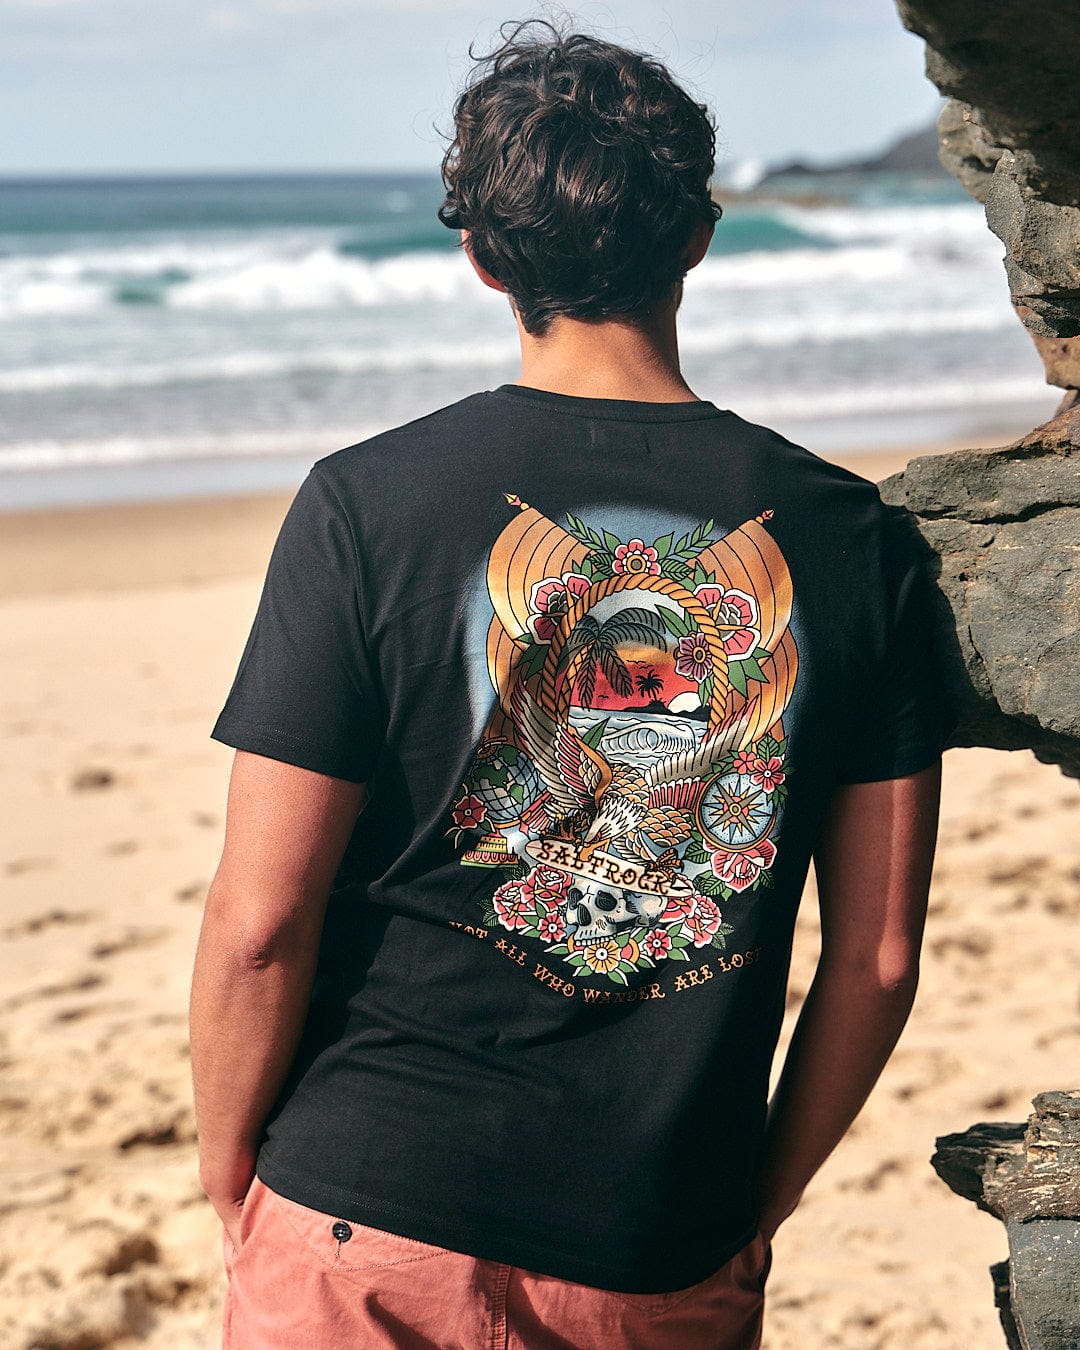 A man wearing a Saltrock - Tattoo Island Mens Short Sleeve T-Shirt in Black, looking at the ocean.